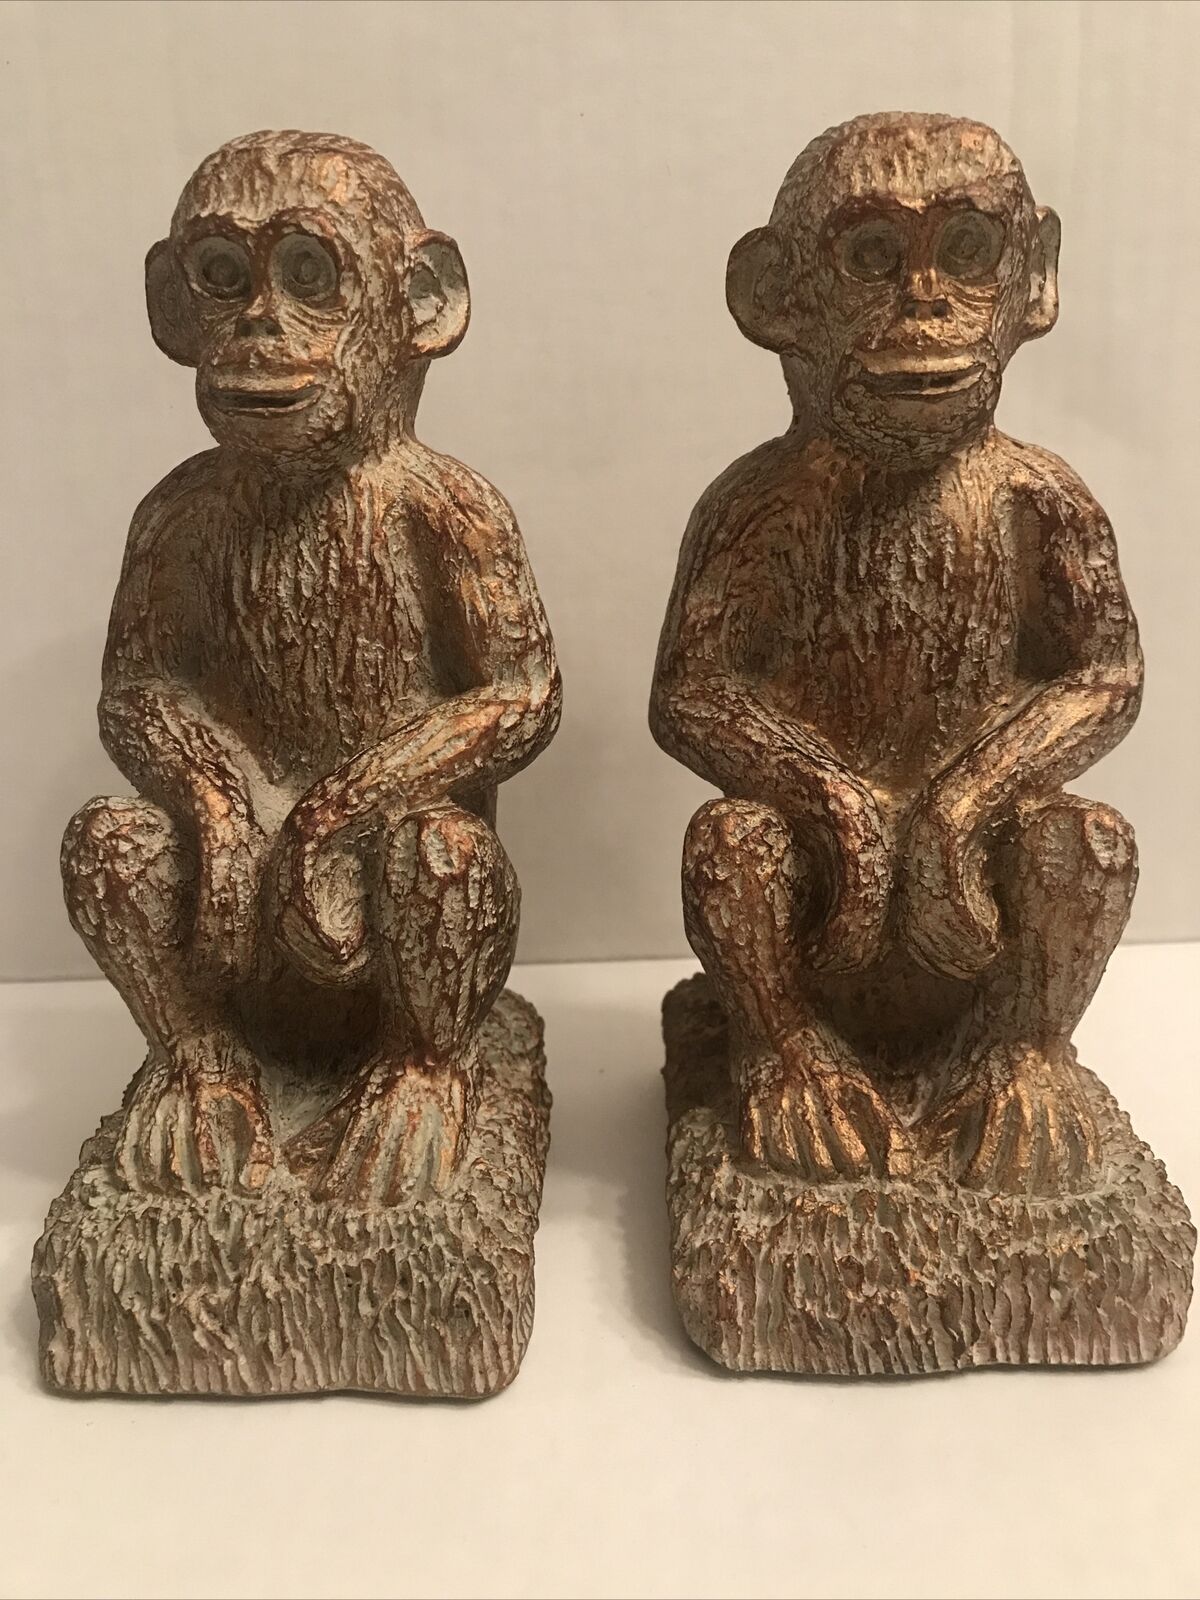 Mellanco Monkey Statue Bookends Books Library Organizing Chimpanzees